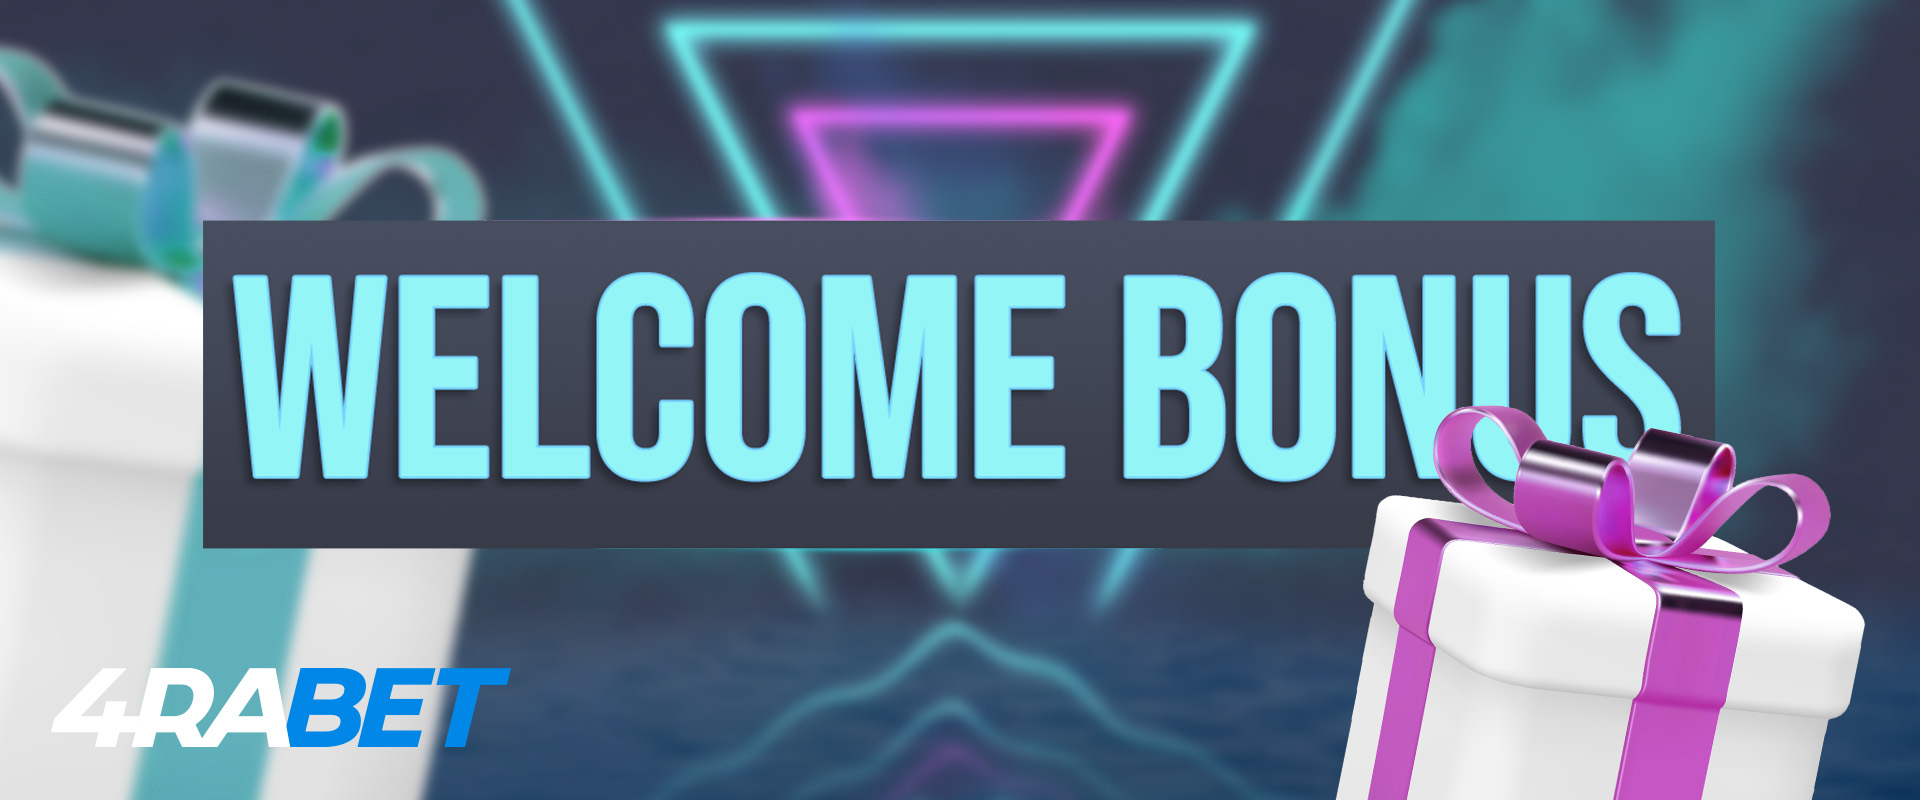 4rabet welcome bonus for new players.